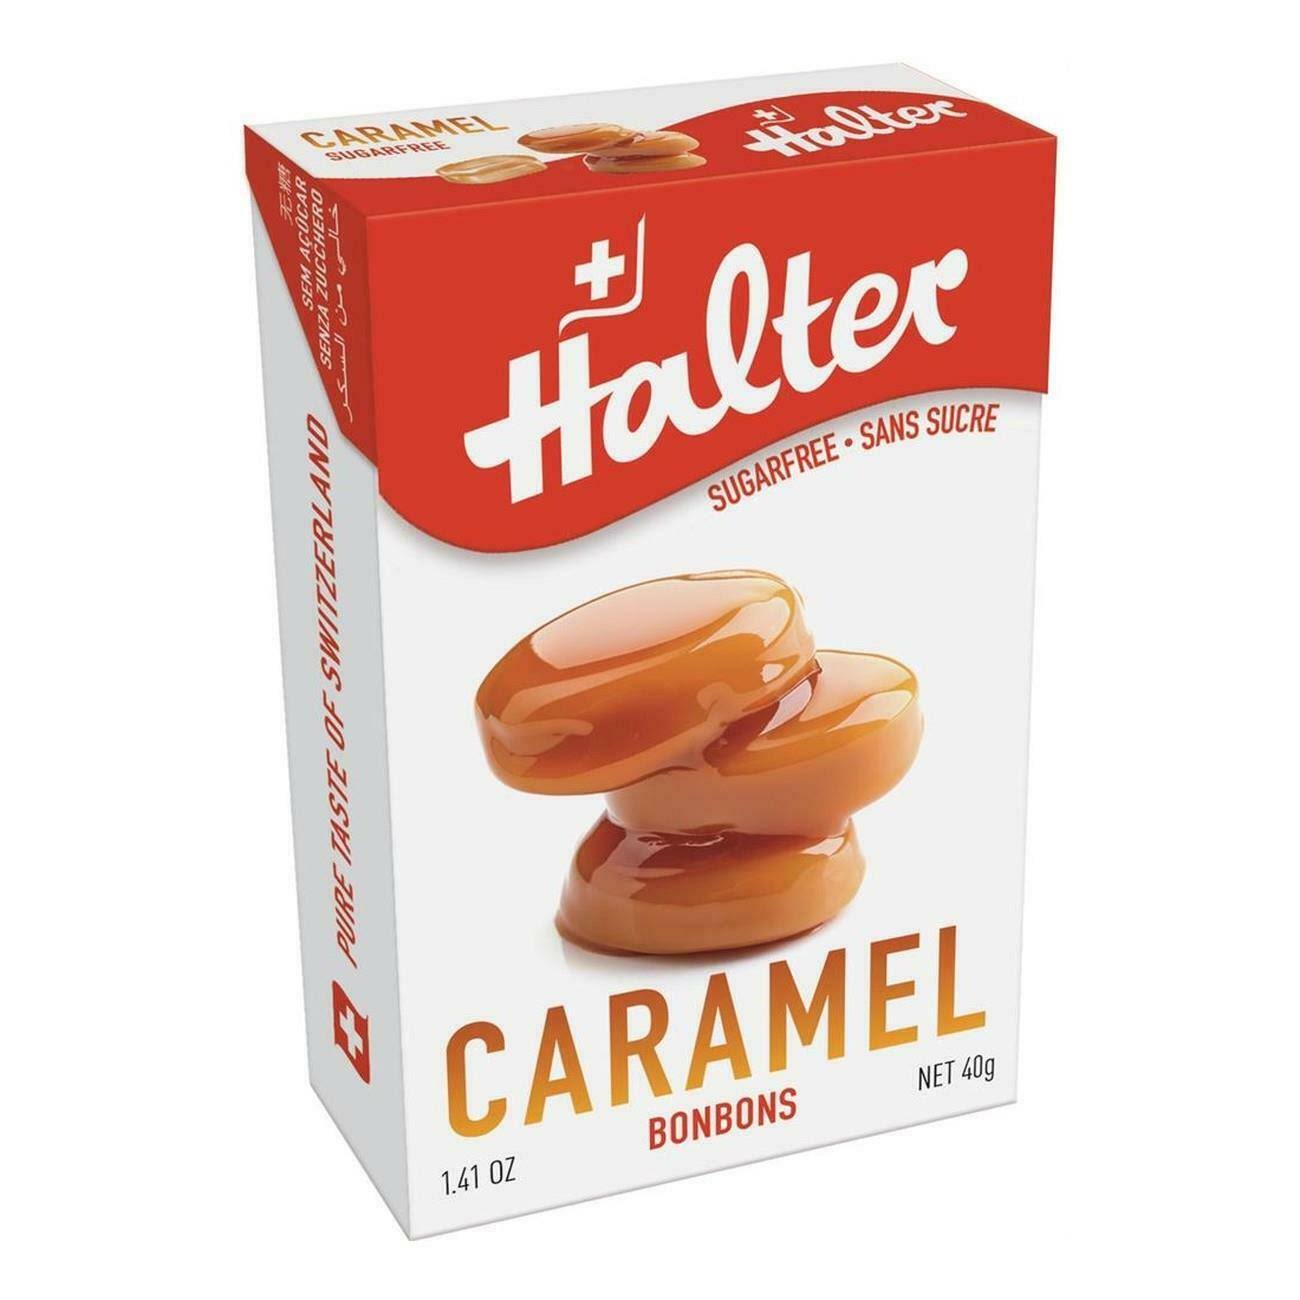 Halter Sugar Free Bonbons - Caramel, 40g